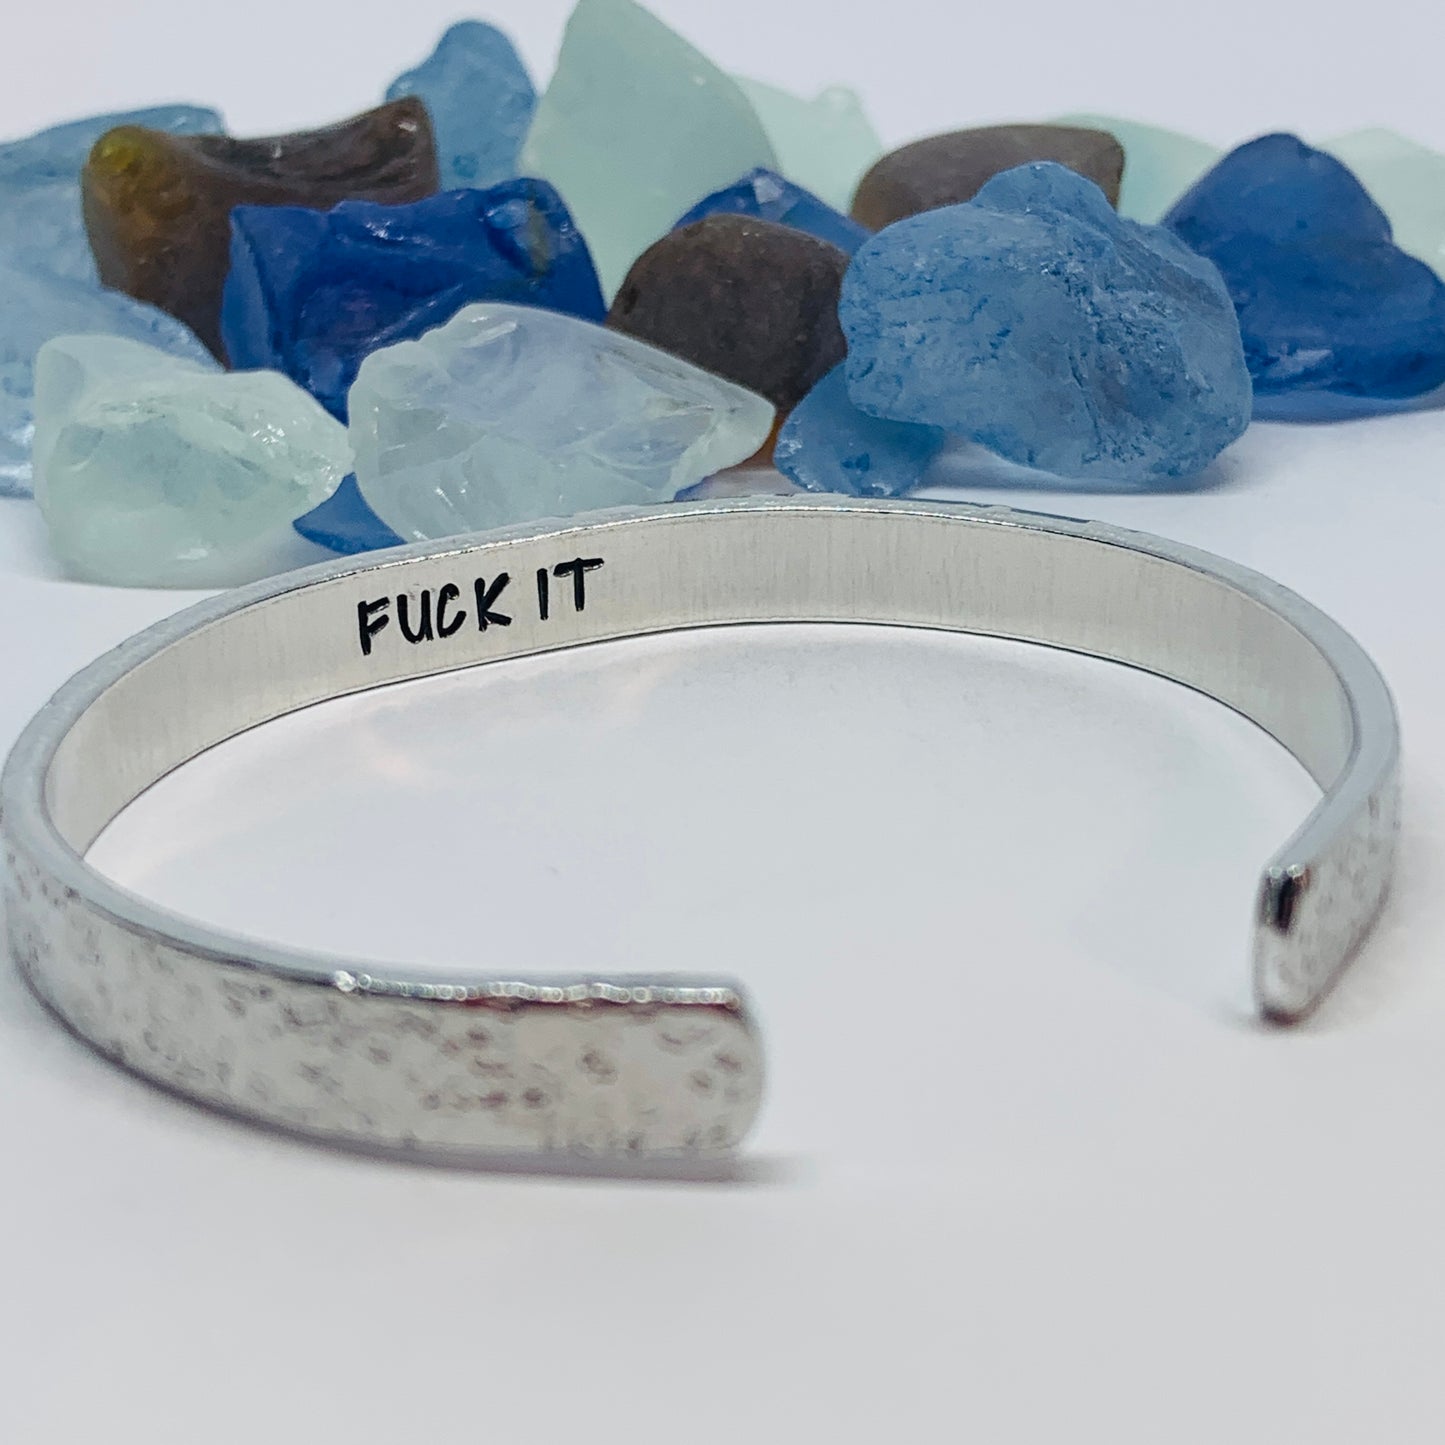 F*ck it - Hand Stamped Textured Hidden Message Cuff Bracelet - Adult Mature